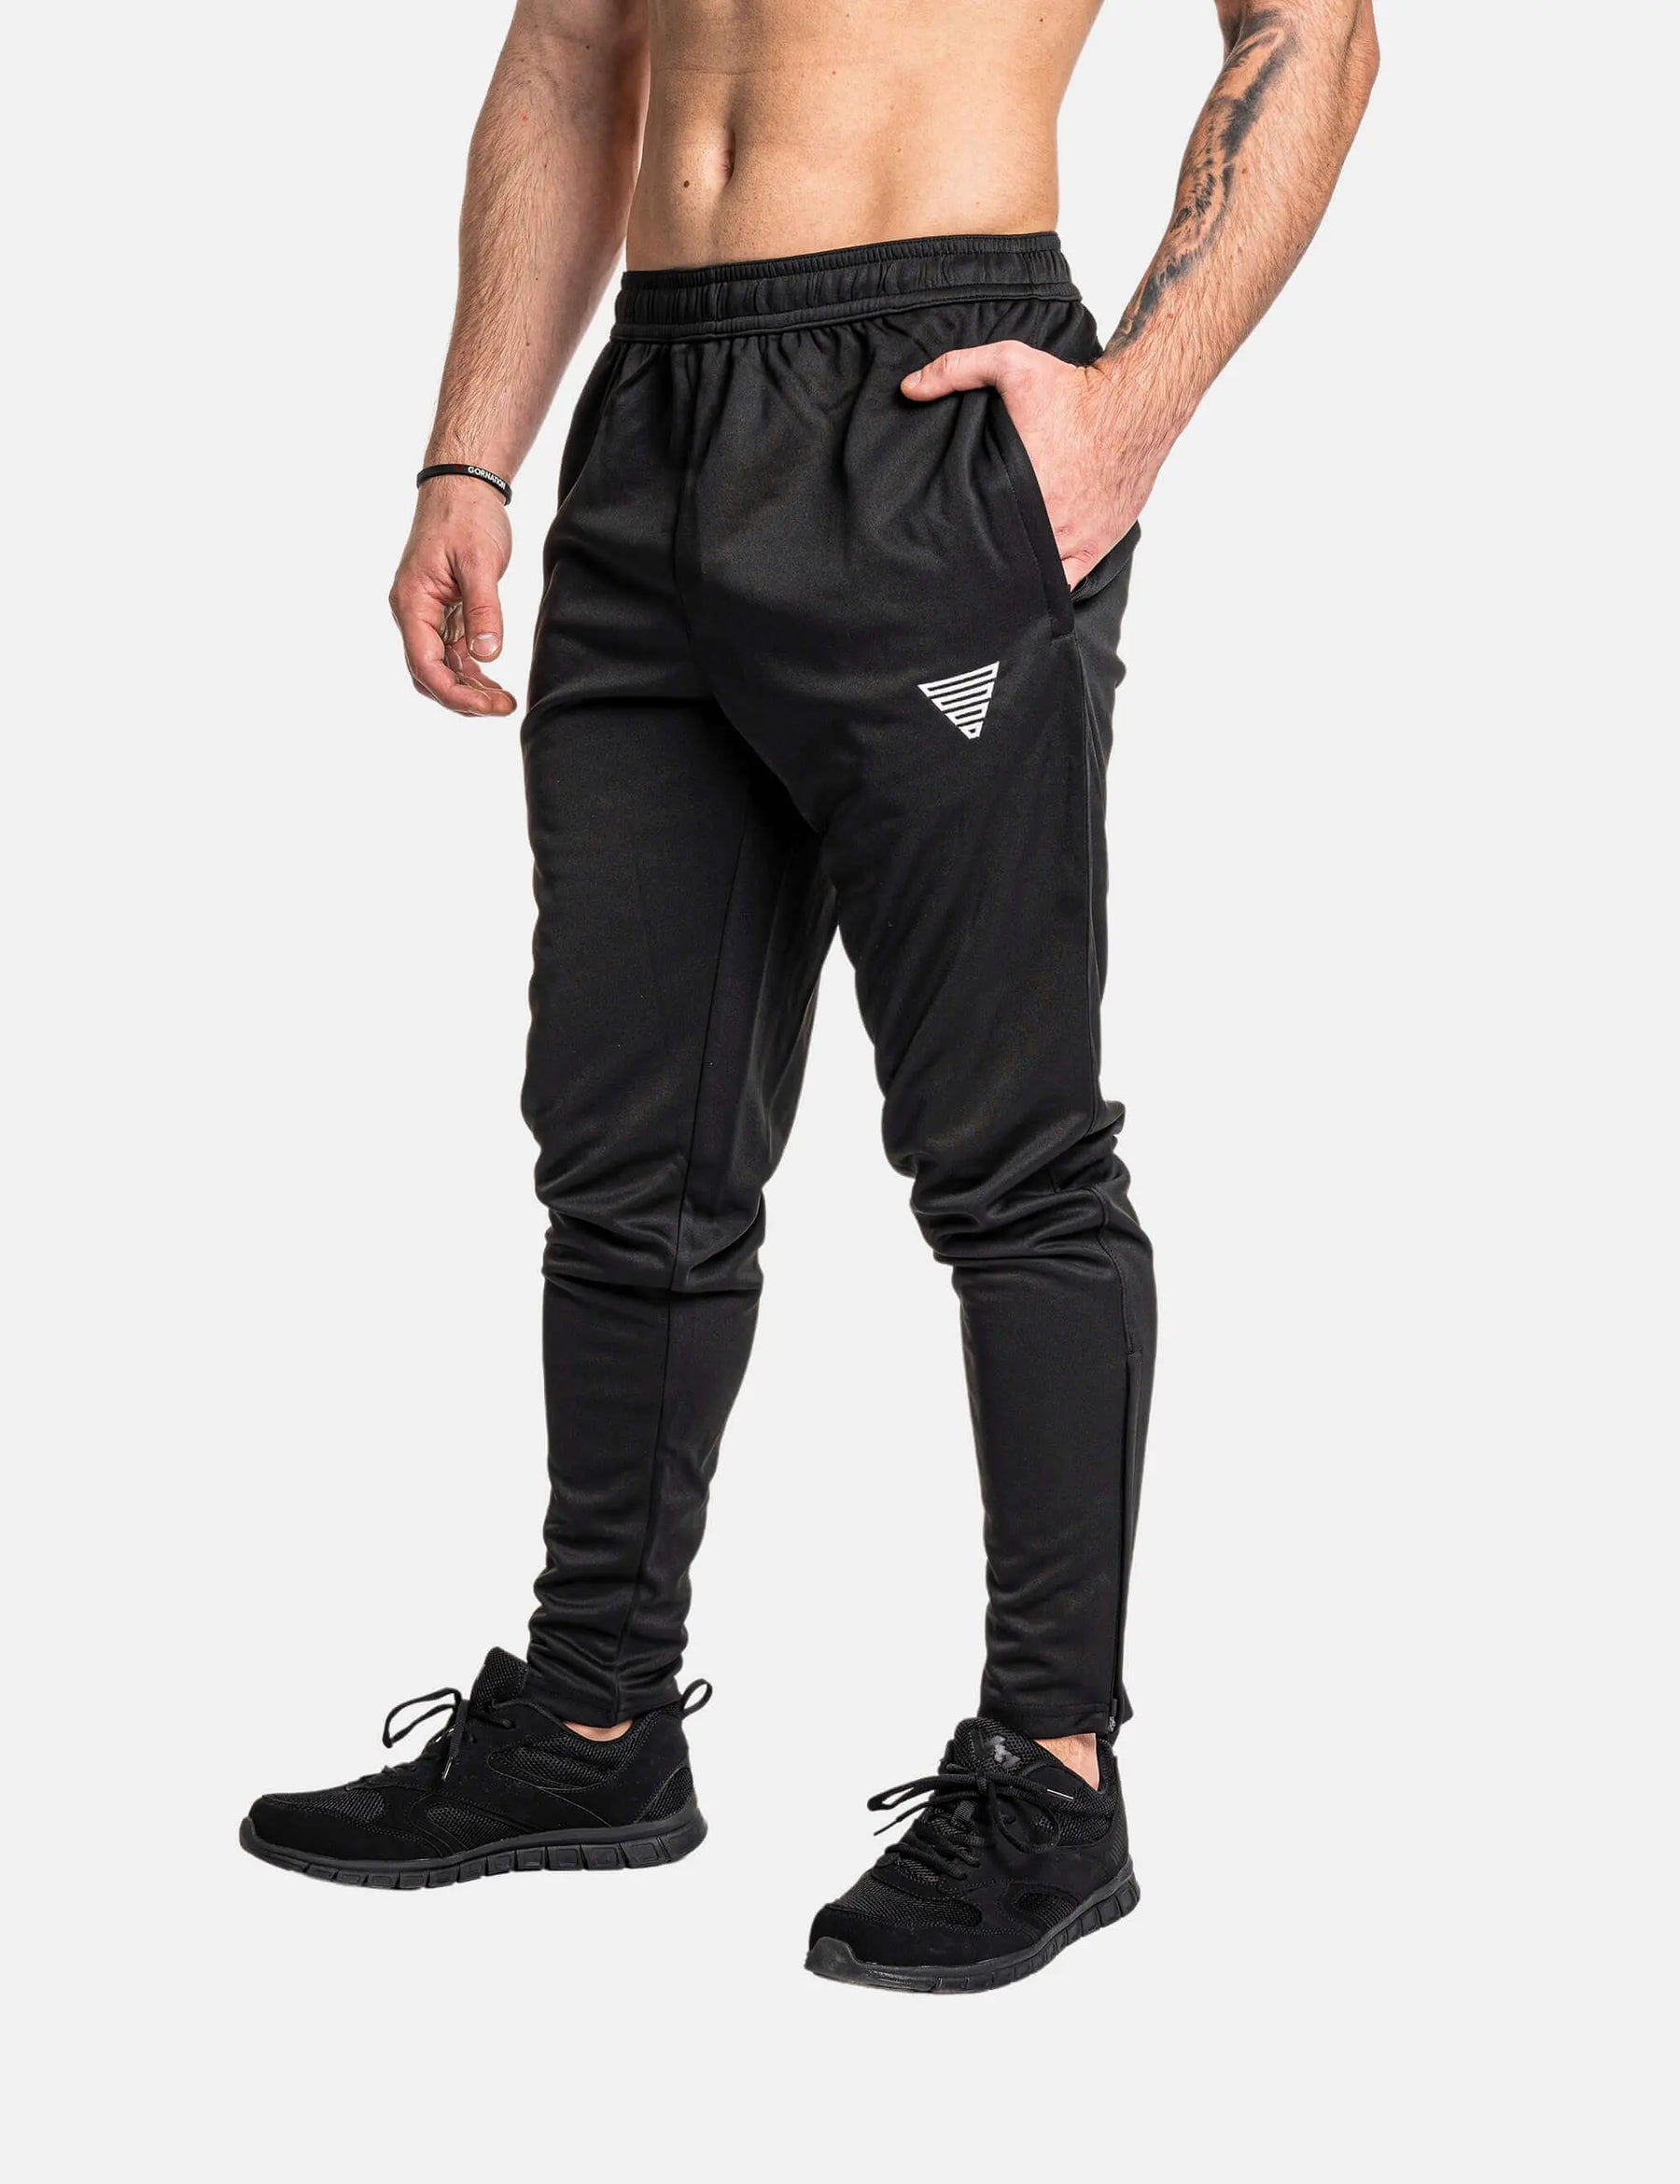 Wangdo Men's Joggers Sweatpants Gym Training Workout Pants Slim Fit with  Zipper Pockets | Pantalones deportivos, Pantalones ajustados, Chándal para  hombre